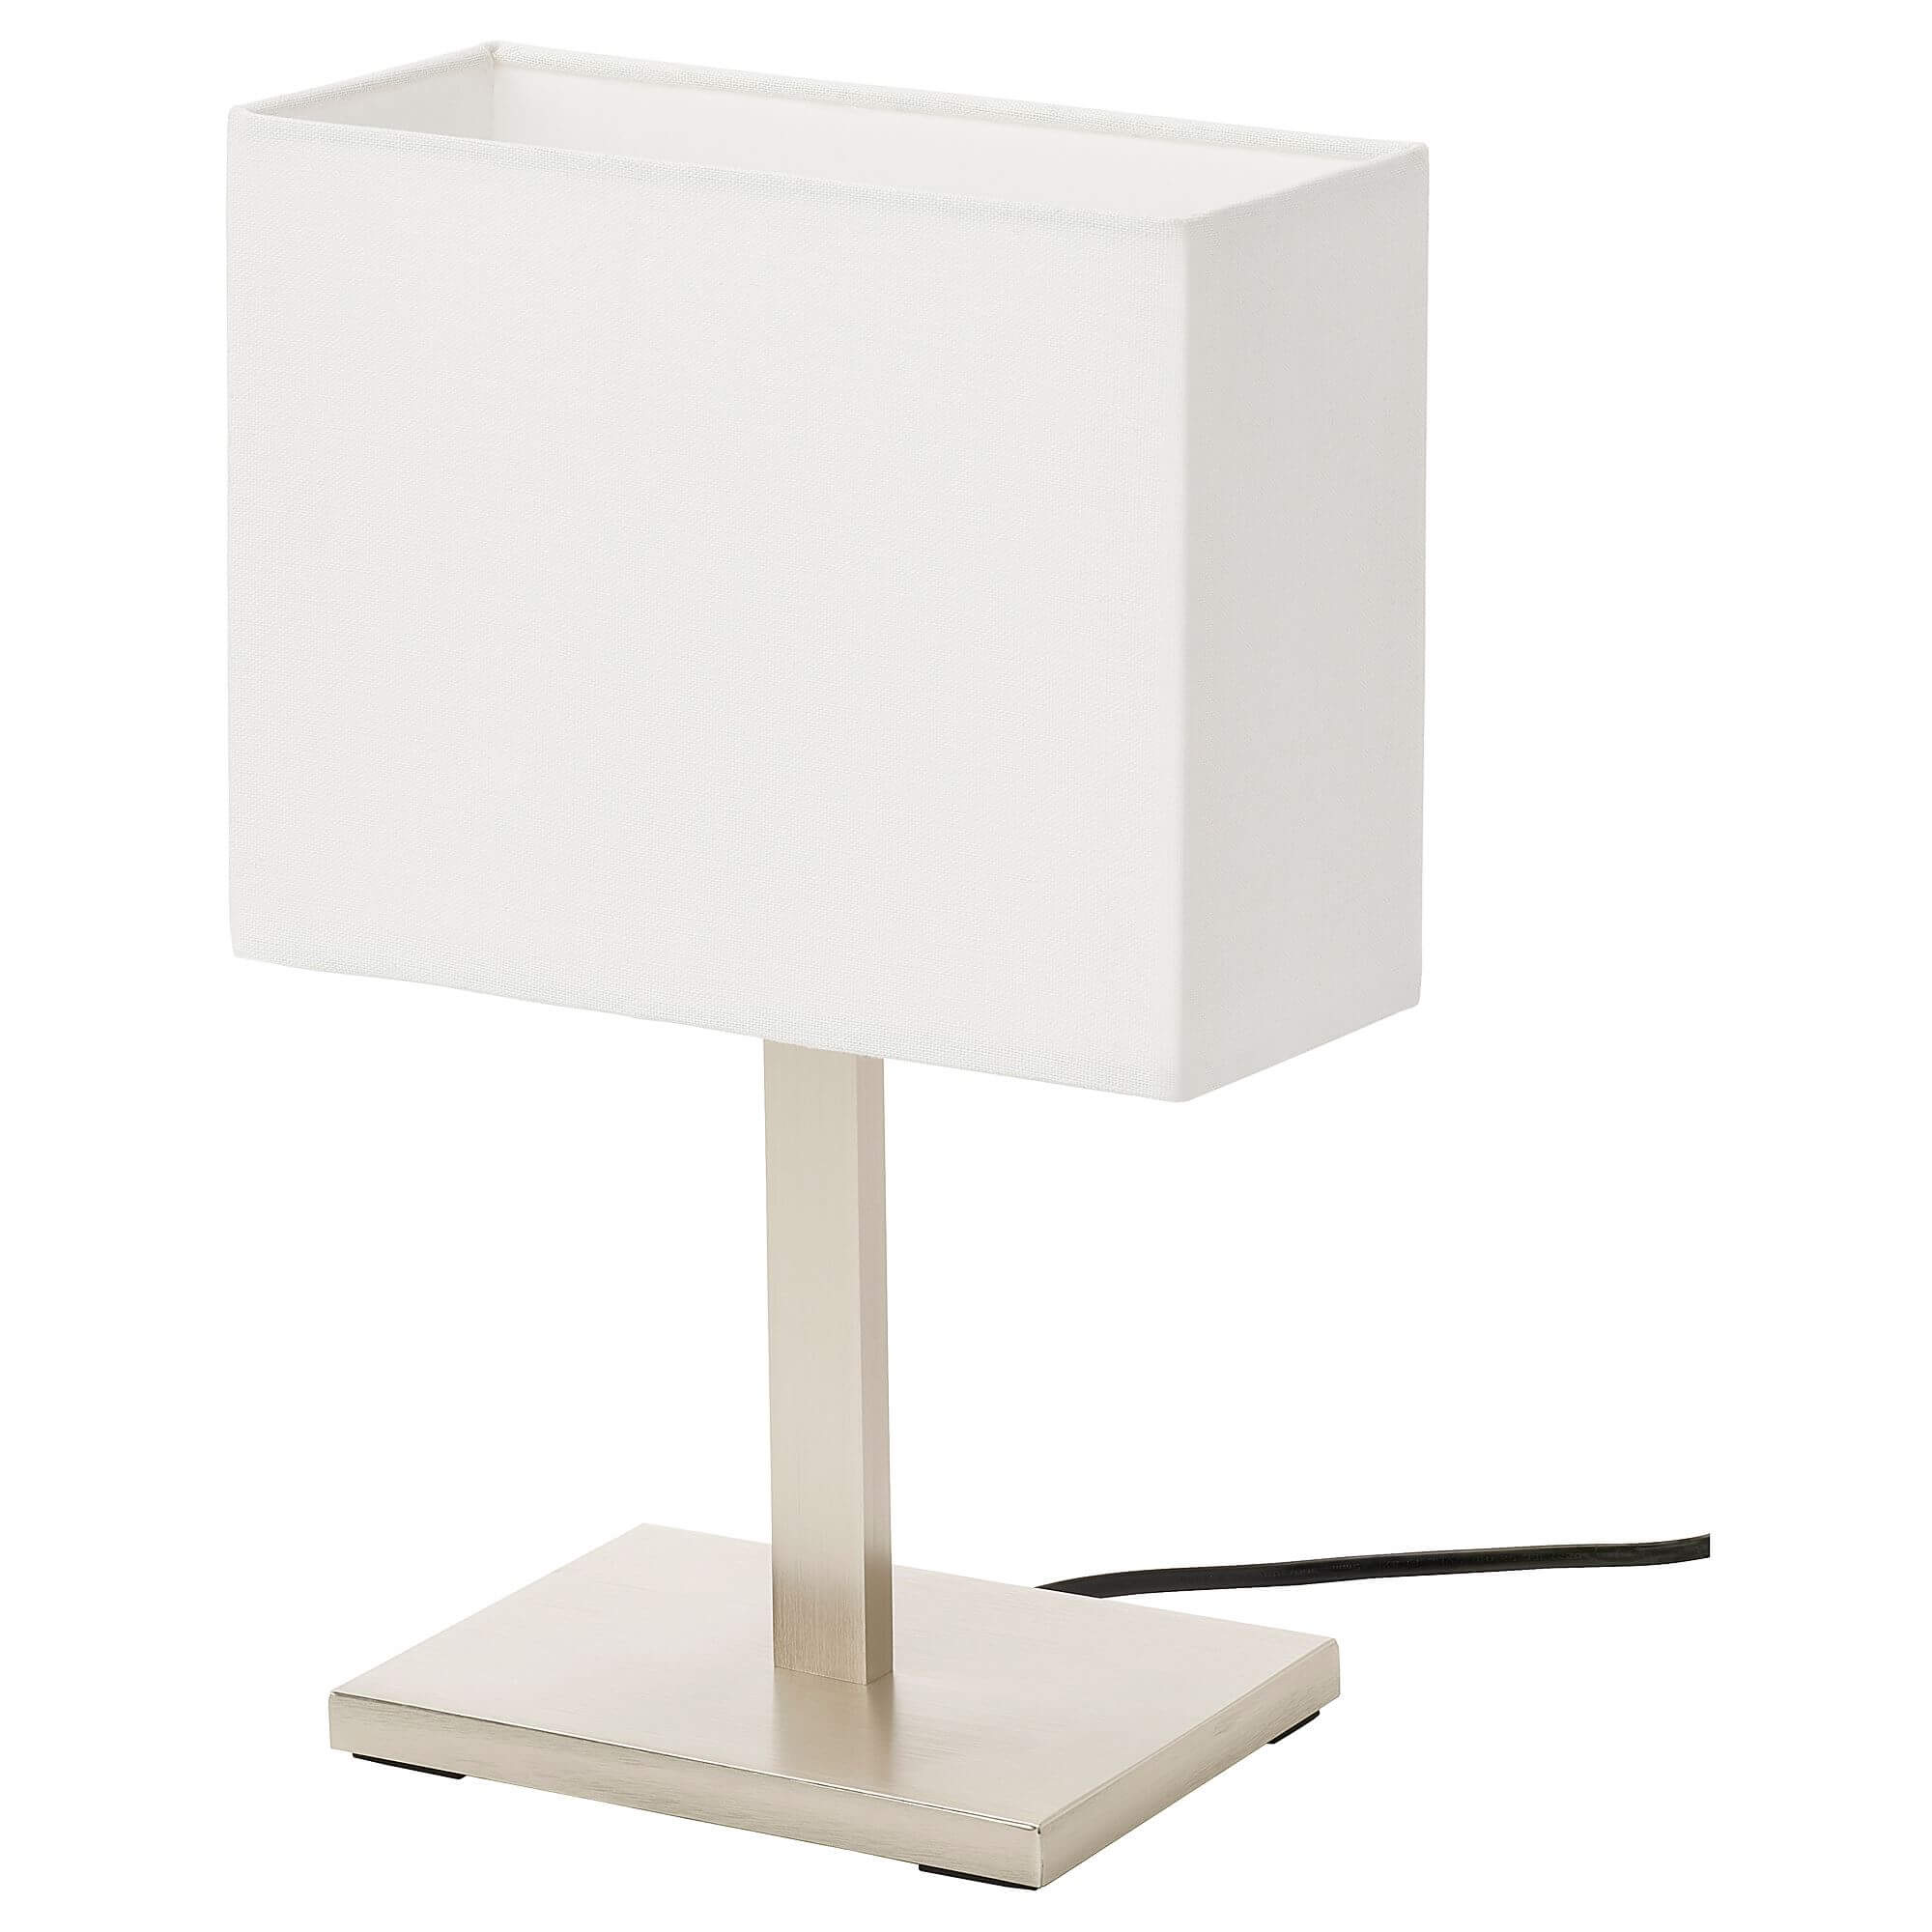 Лампа настольная Ikea Tomelilla, белый плиссированный тканевый абажур для лампы декоративный абажур для лампы сменный абажур для настольных ламп